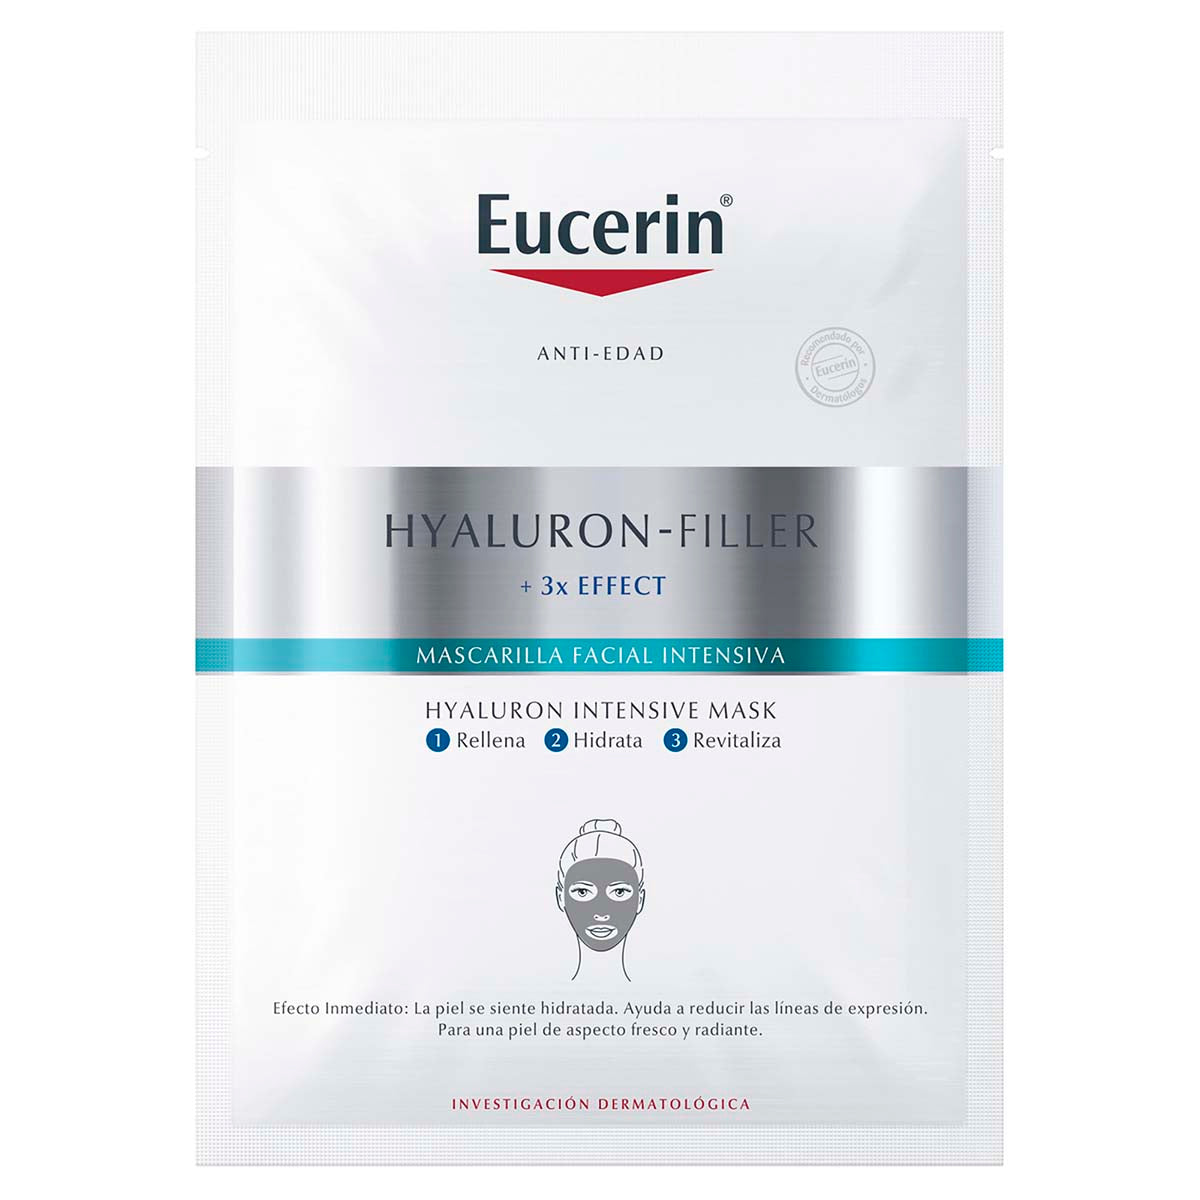 Eucerin hyaluron-filler 3x effect mascarilla facial anti-edad Intensiva 1 pieza.